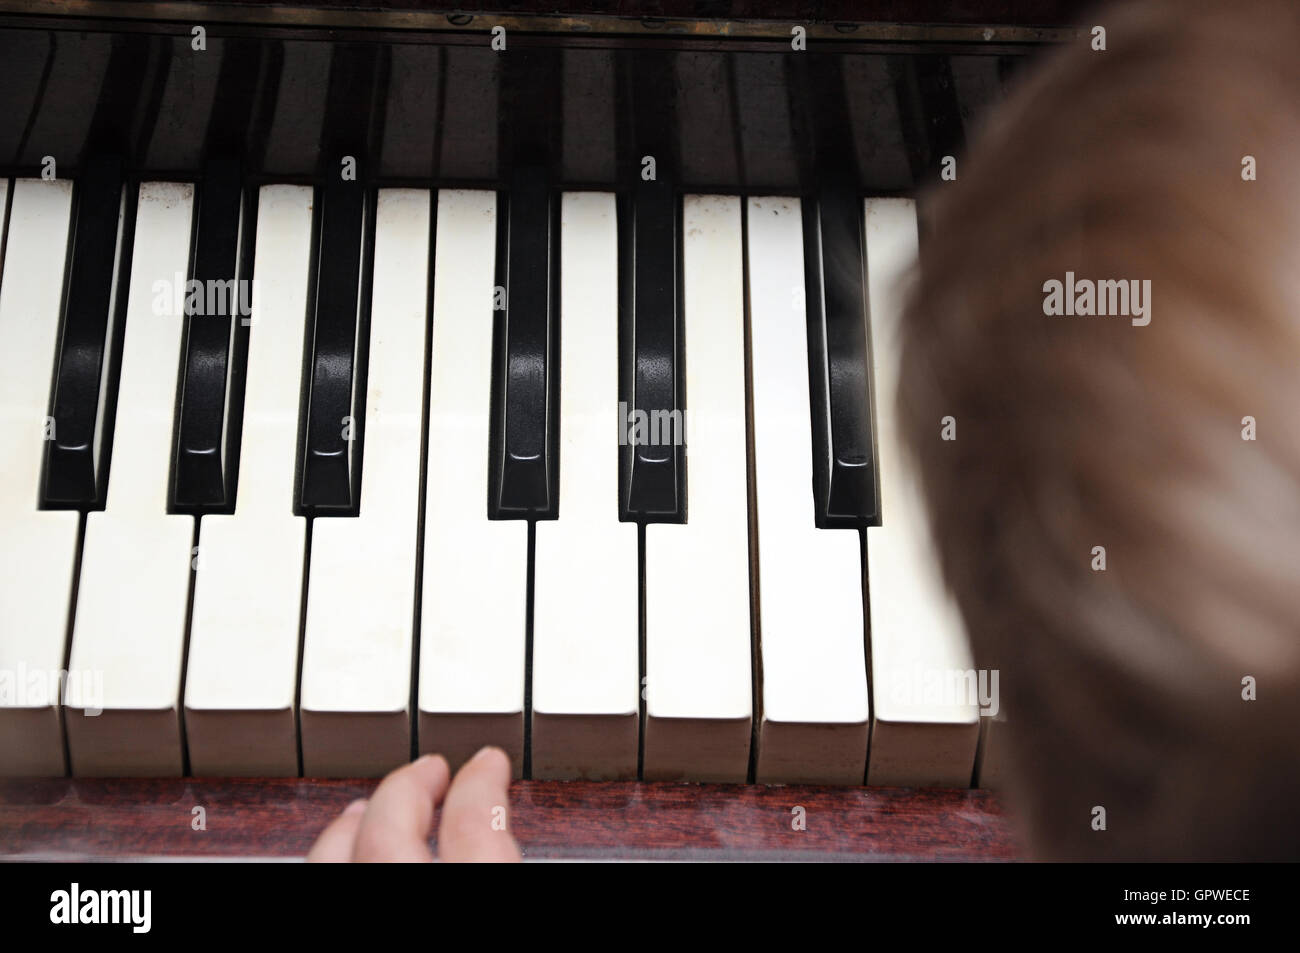 Bebé con instrumento musical fotografías e imágenes de alta resolución -  Alamy